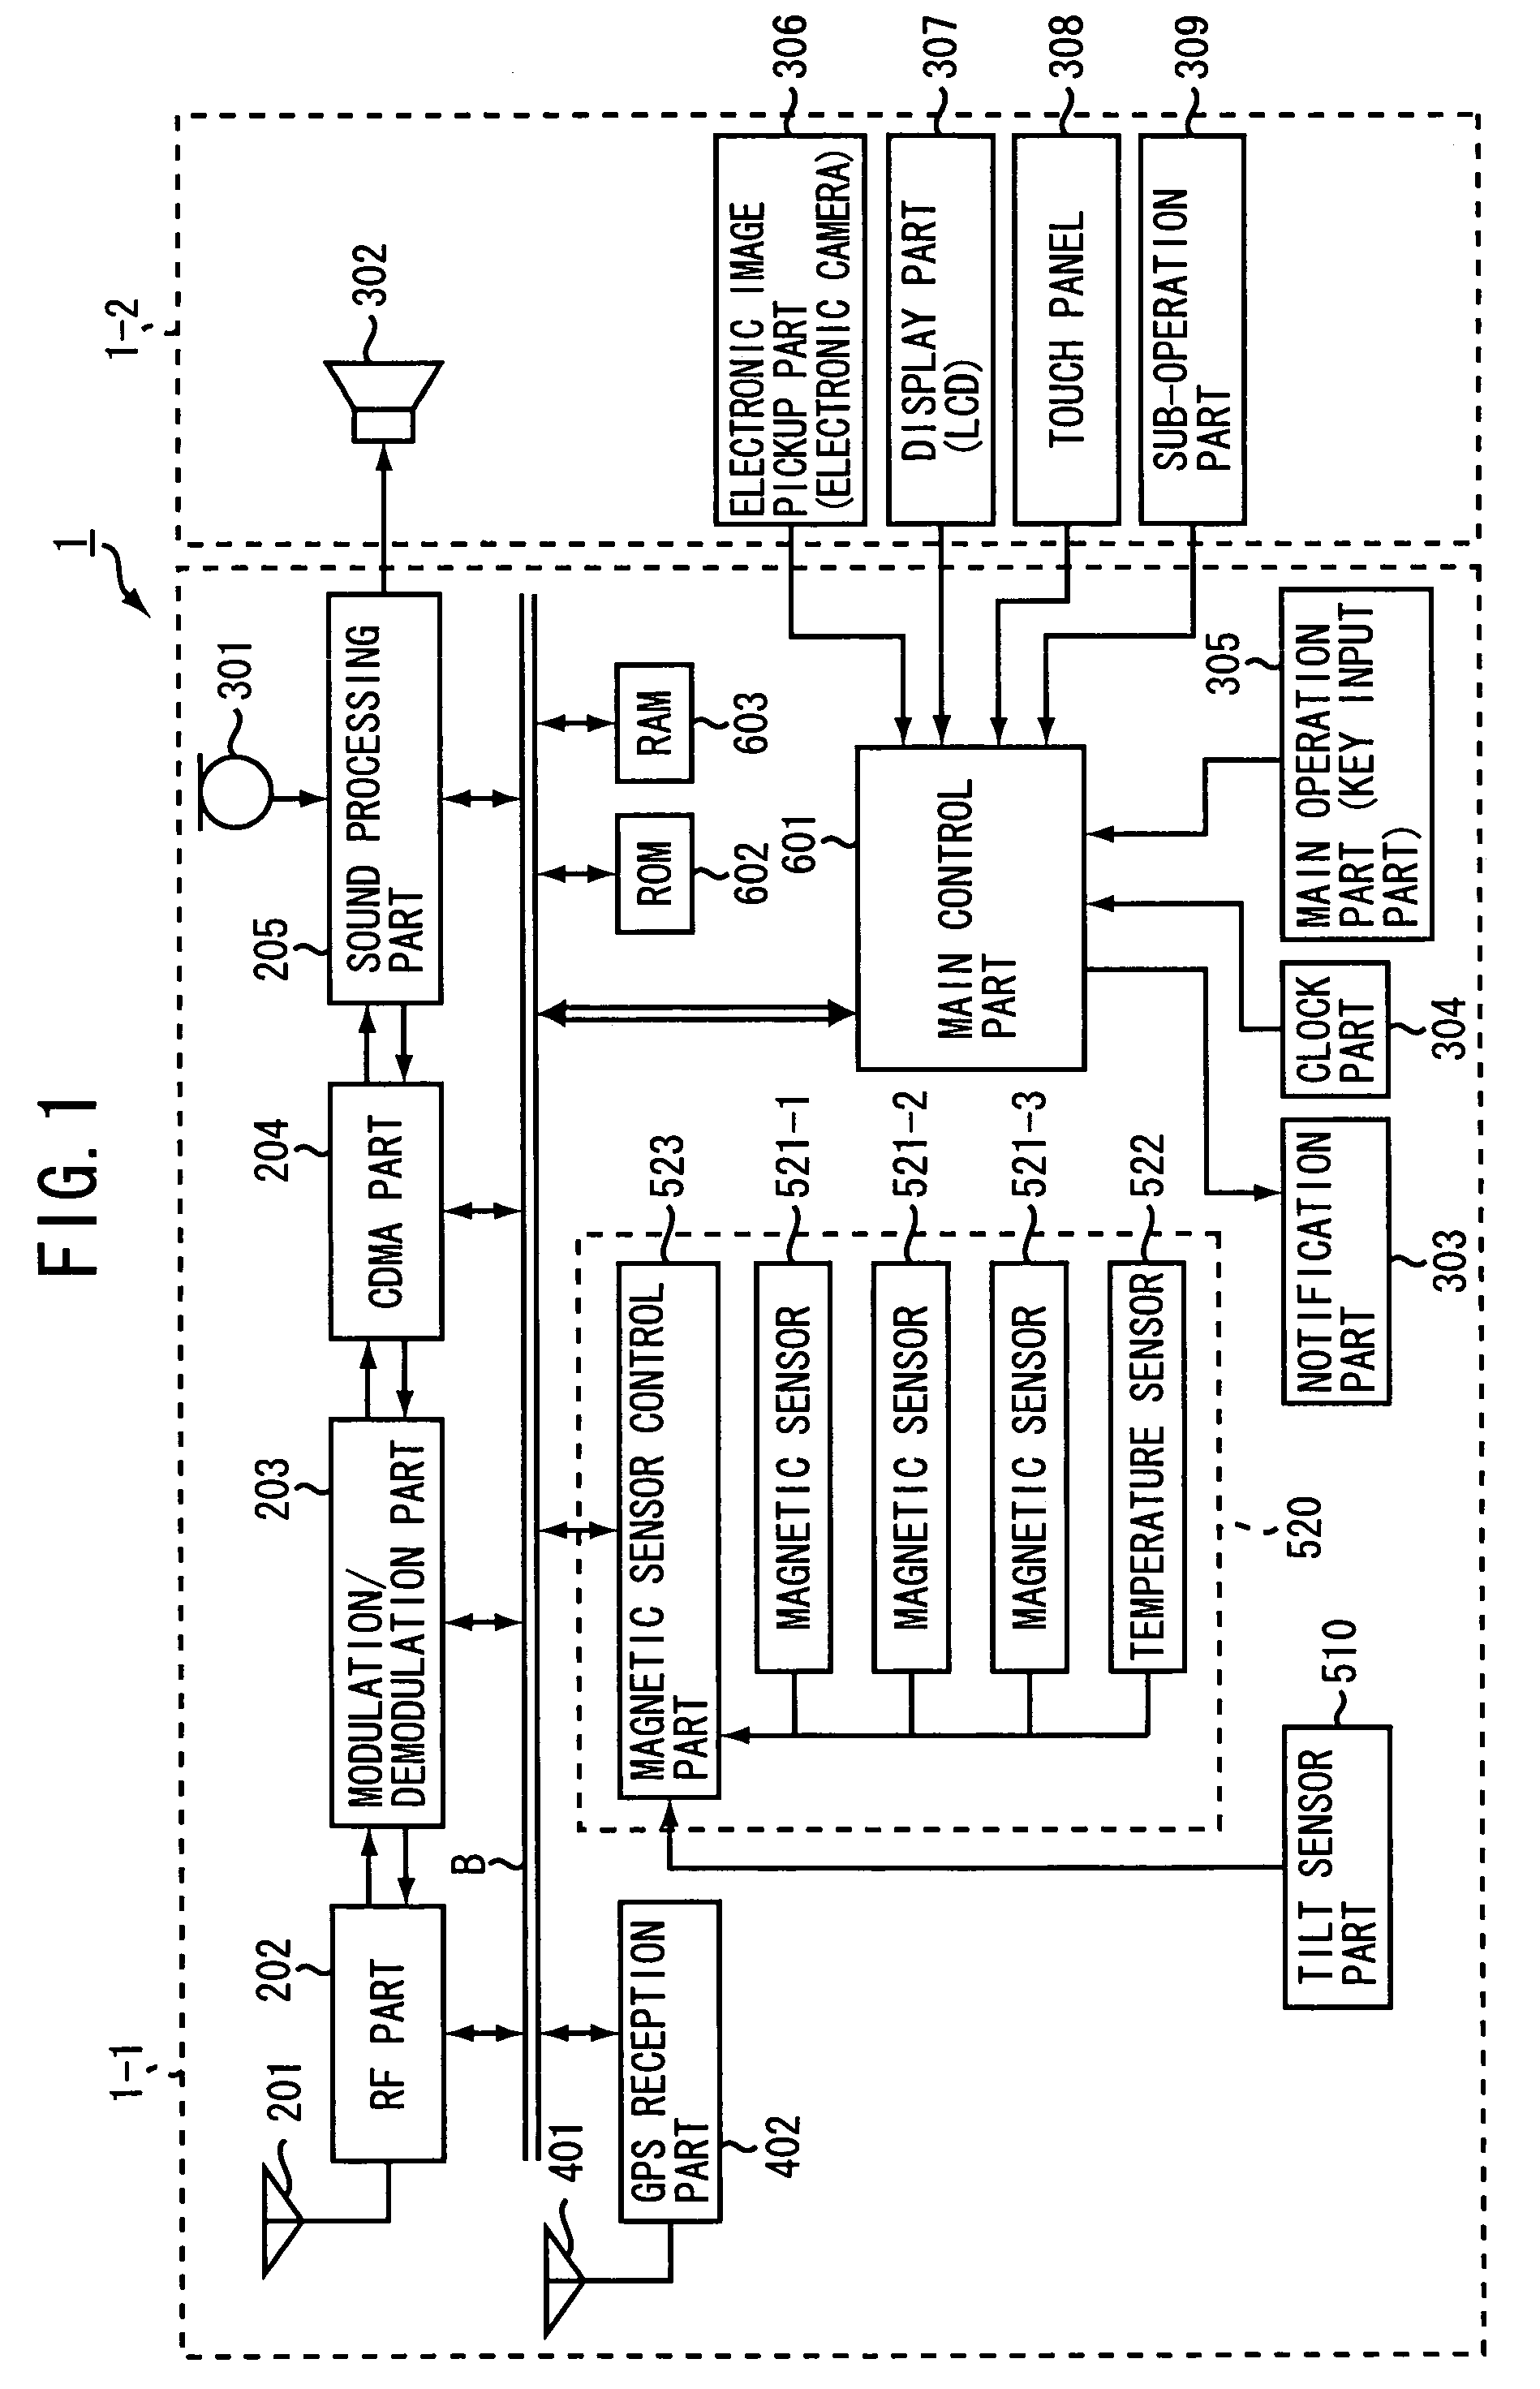 Portable terminal apparatus with auto caliblation of orientation measurement